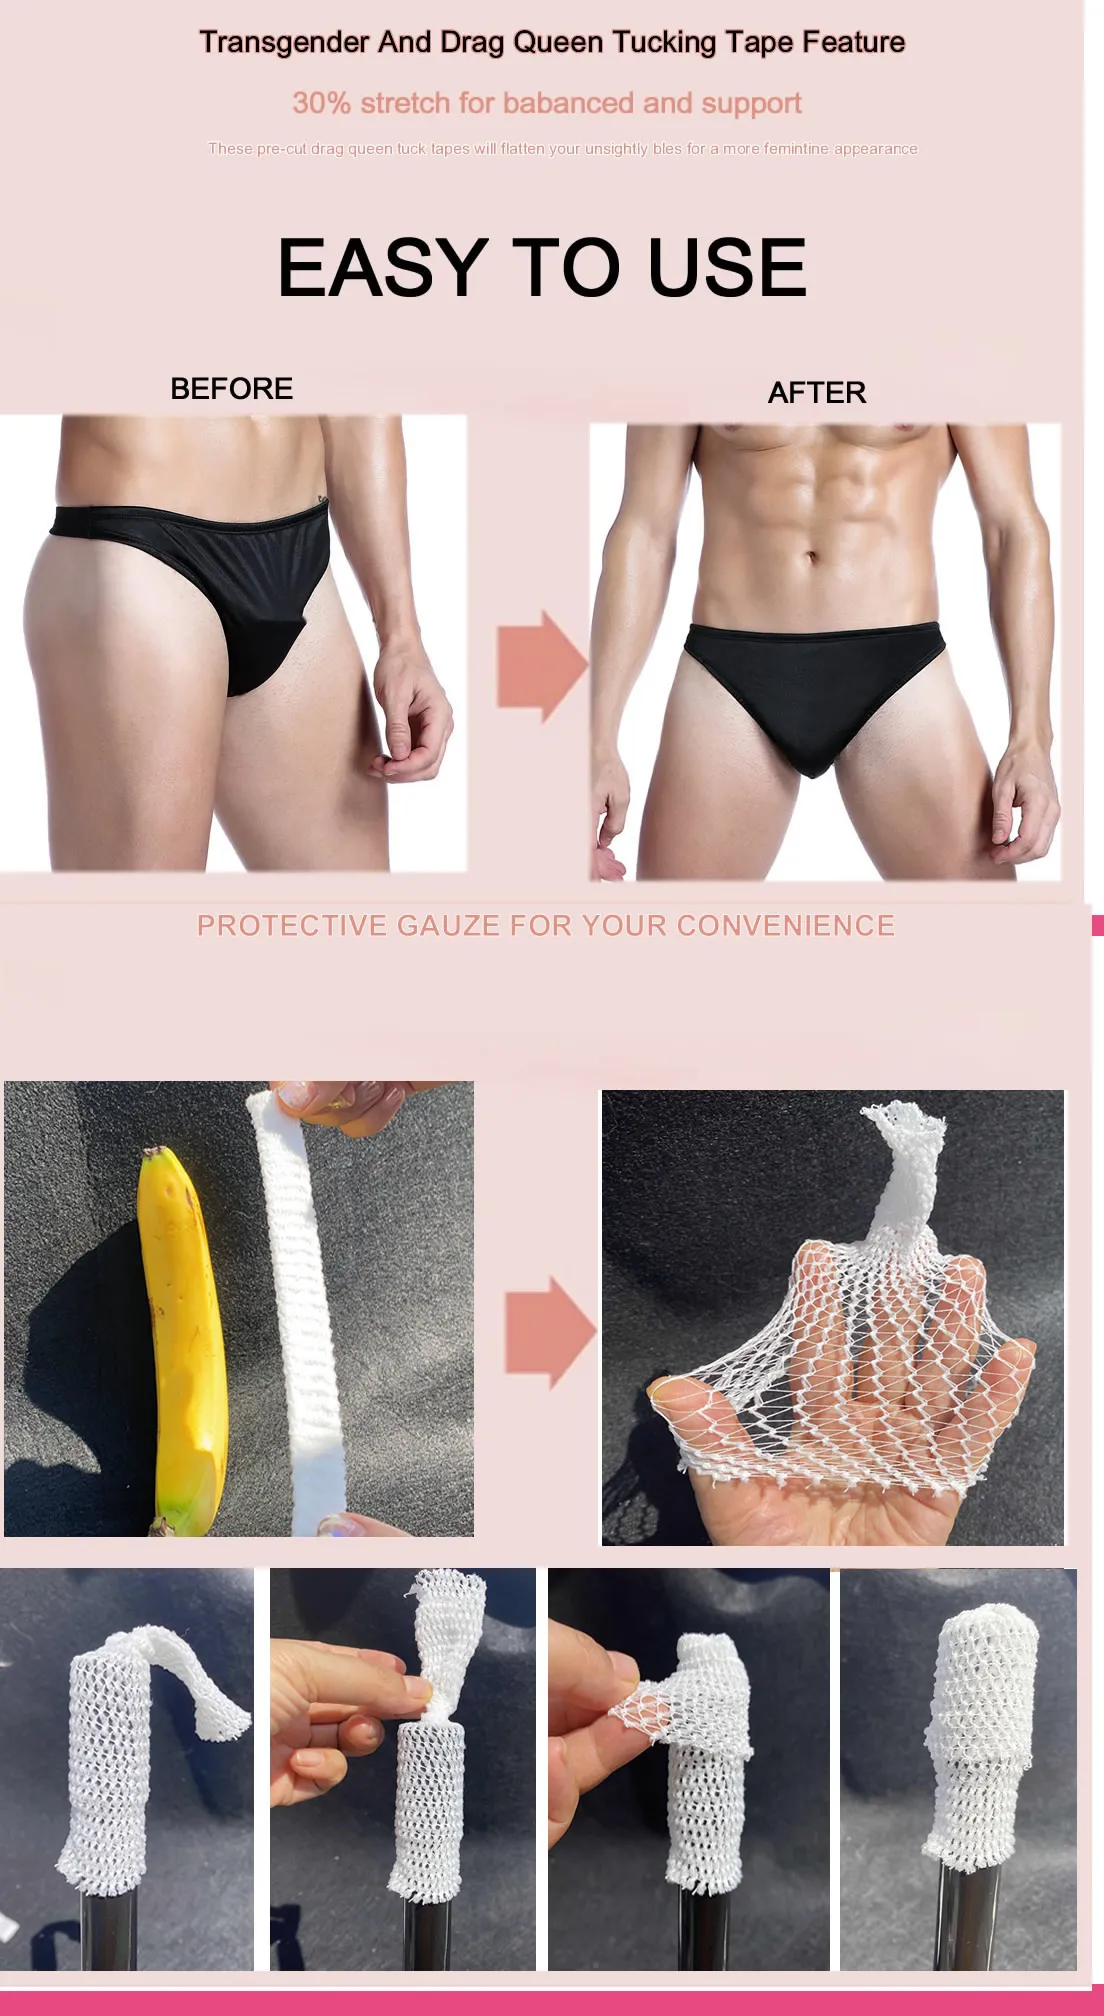 BIMEI Mermaid T Poster Tape Tuck Kit Gaff Alternative For Transgender, NB,  Drag Queens, And Crossdressing From Bimei, $13.19